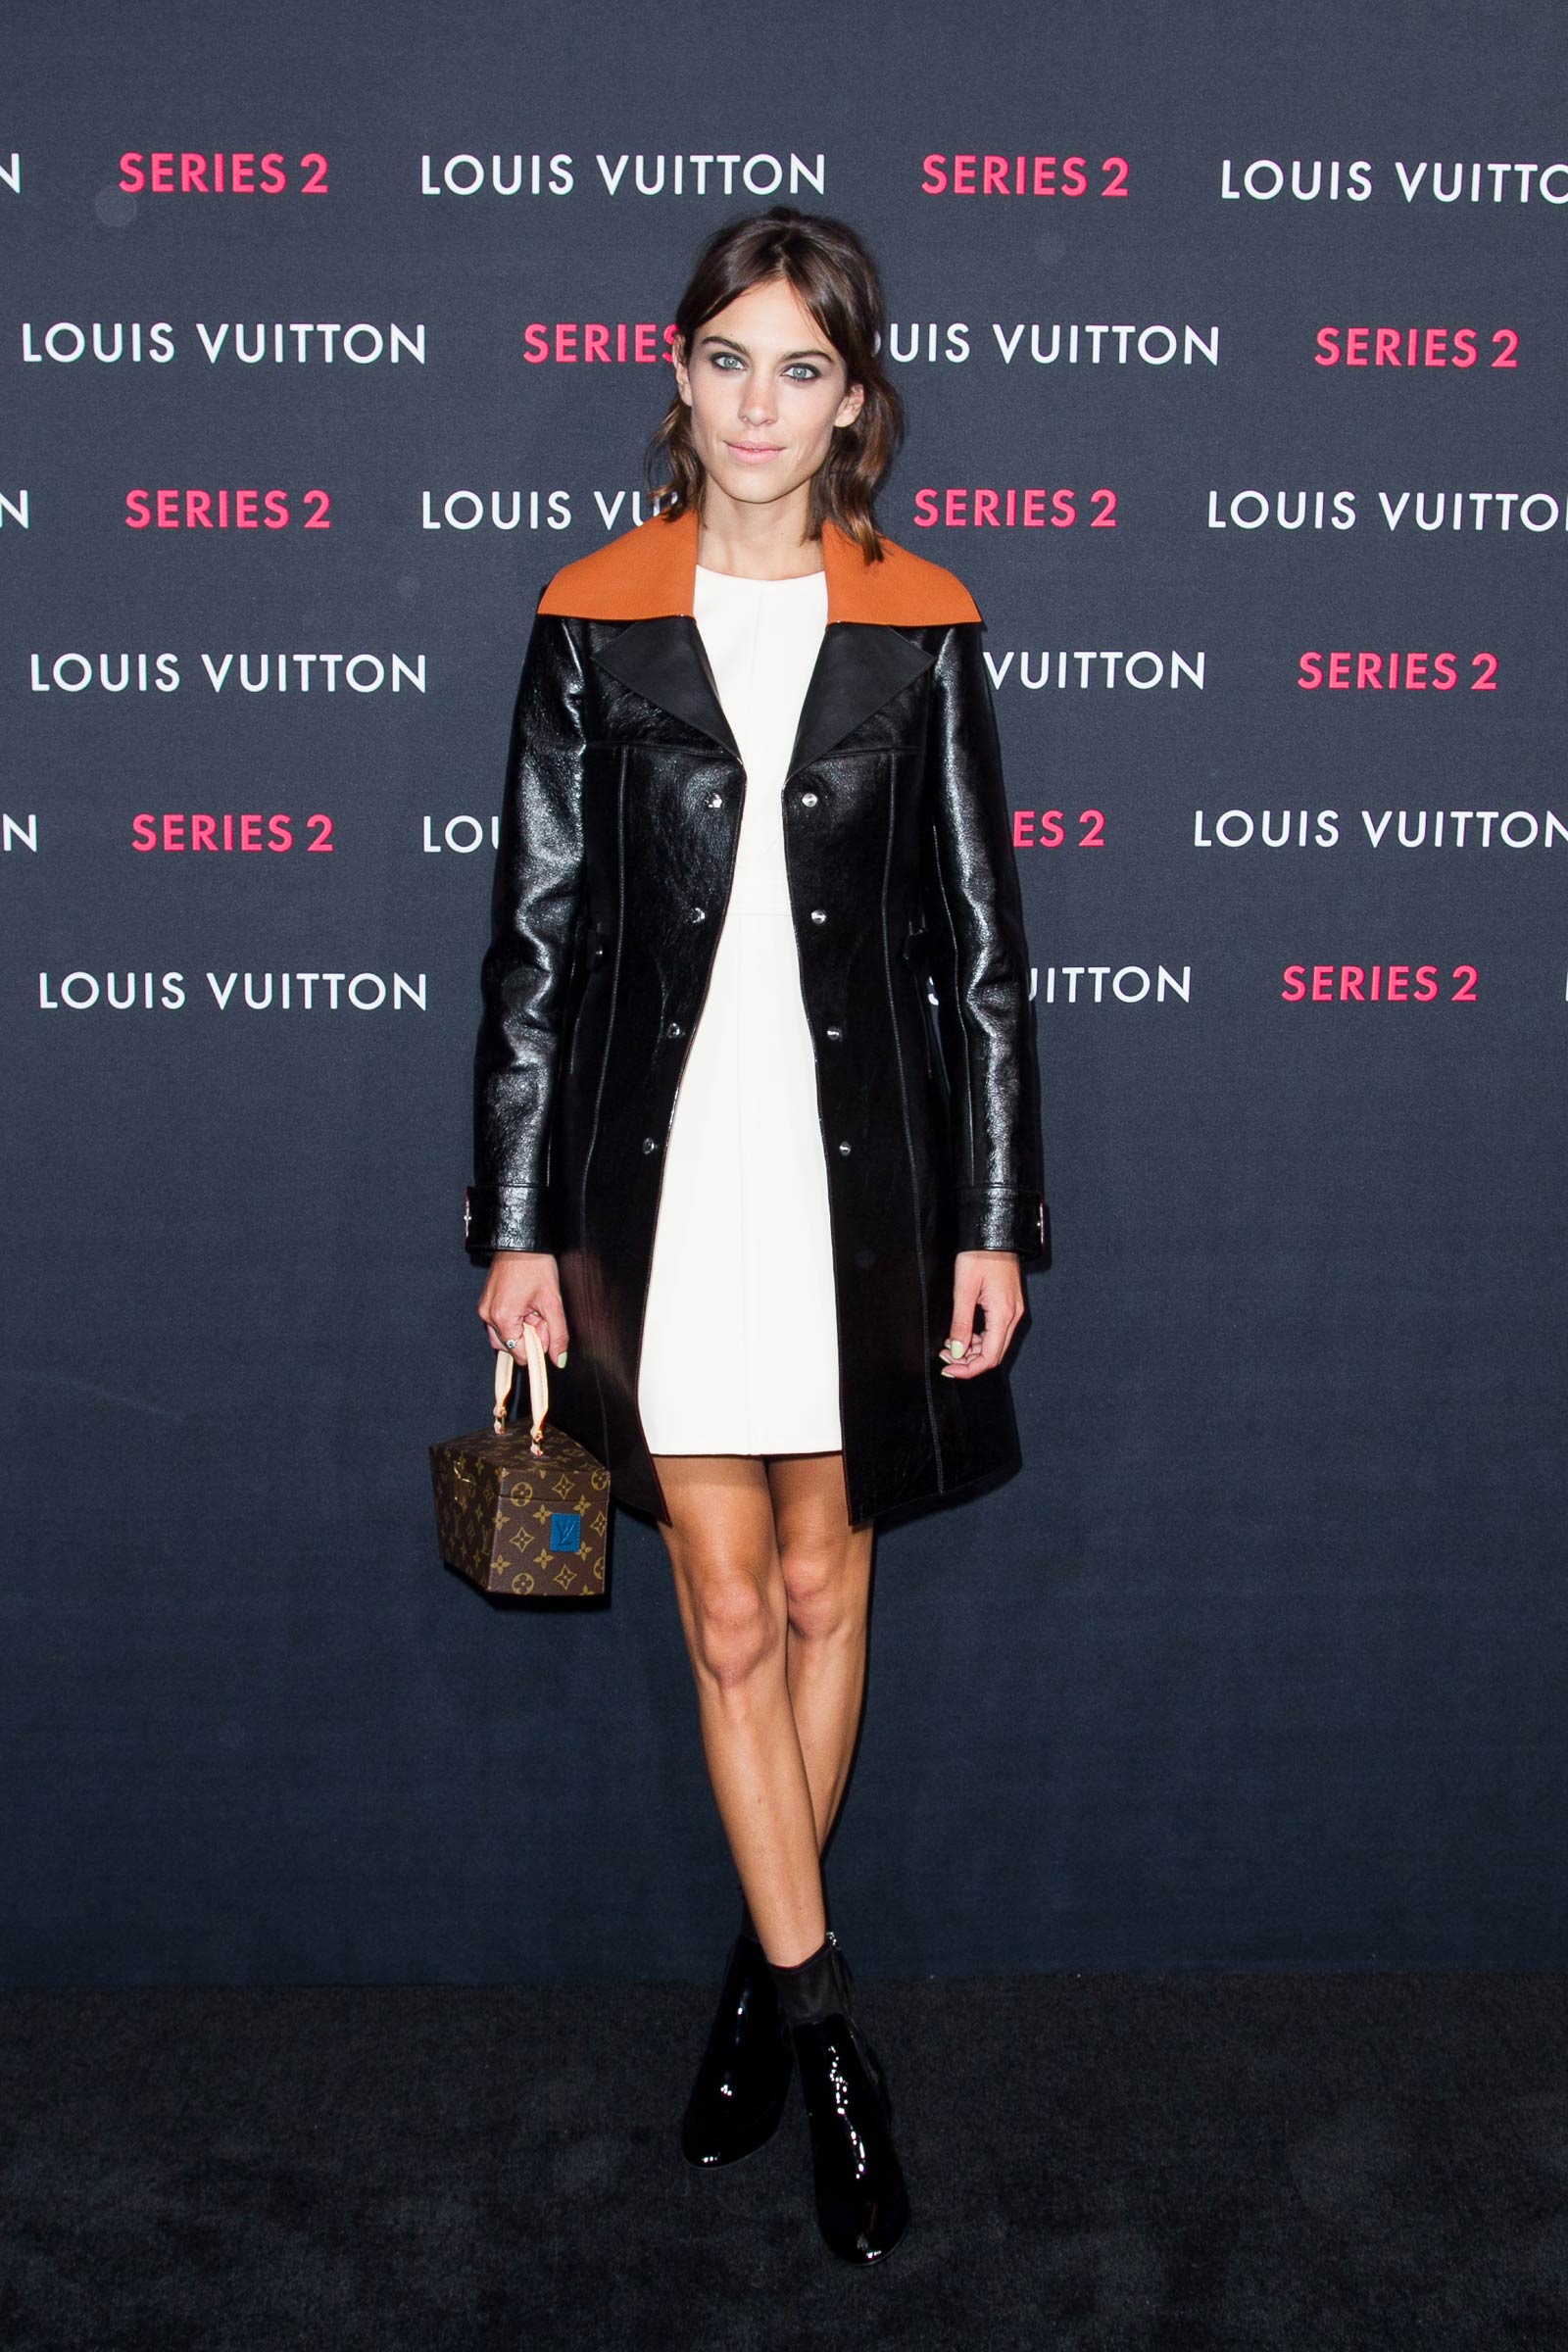 Alexa Chung attends Louis Vuitton Series 2 The Exhibition